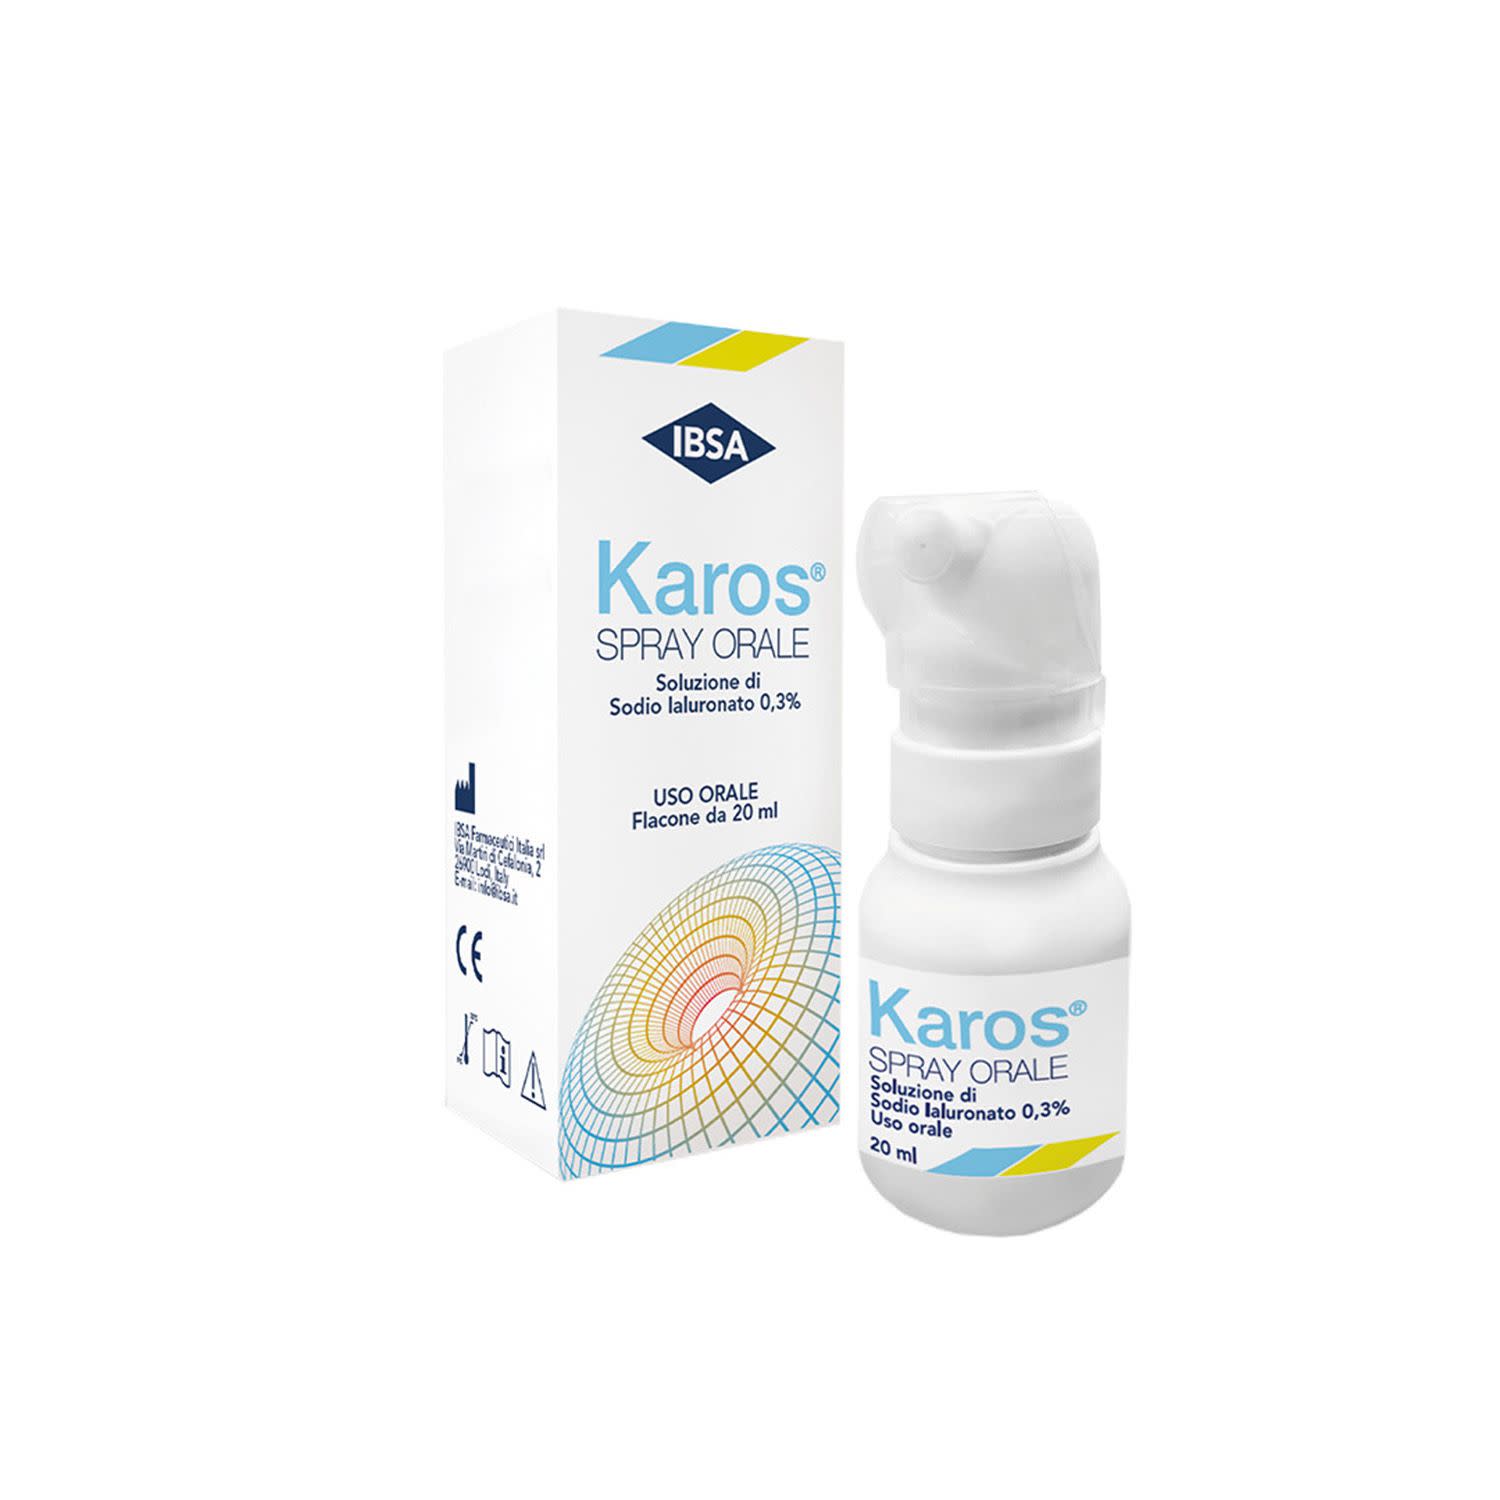 935801910 - Karos Spray 0,3% Sodio Ialuronato Trattamento Mal Gola 20ml - 7889491_2.jpg